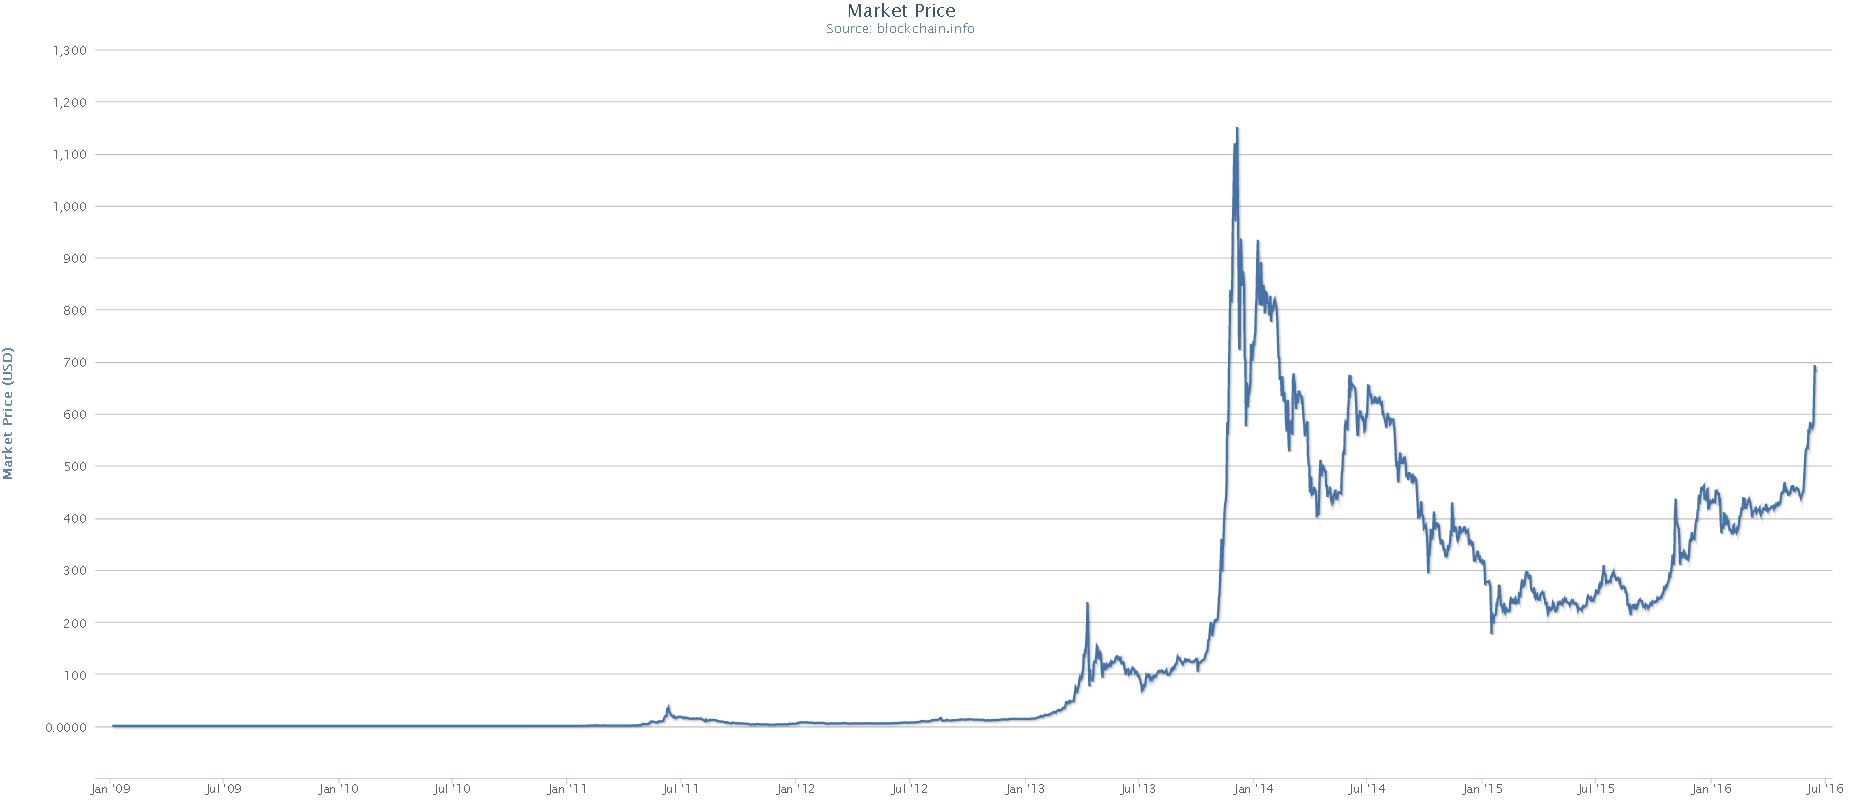 Bitcoin Market Price